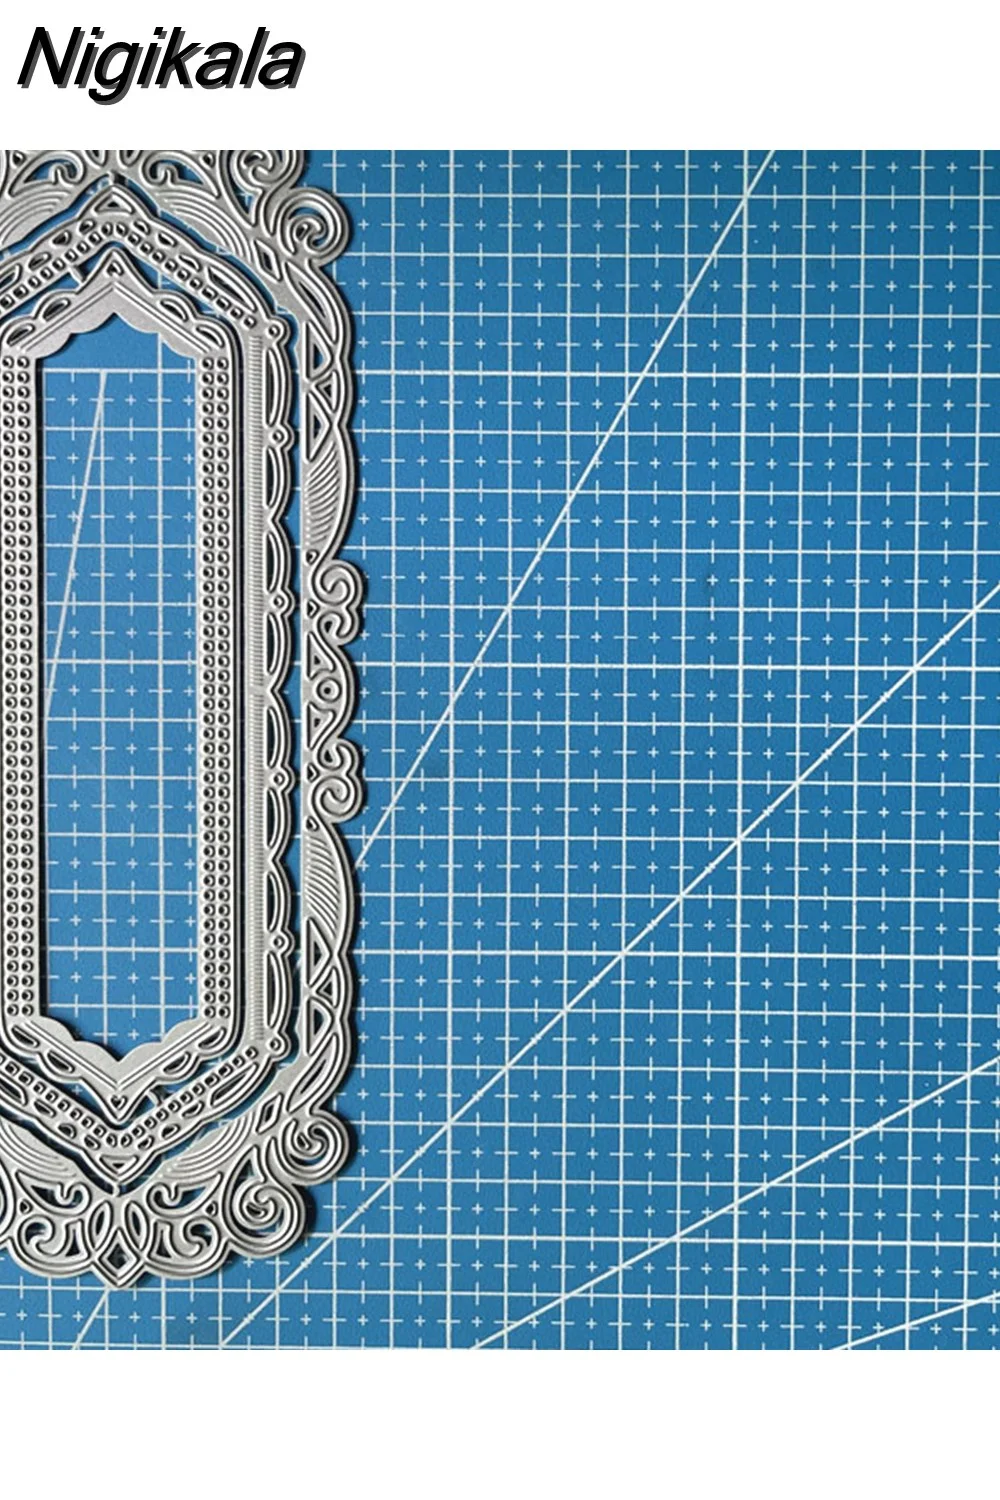 Nigikala Goddess Metal Cutting Dies Layered Frame #2 Diy Scrapbooking Photo Album Decorative Embossing Paper Card Crafts